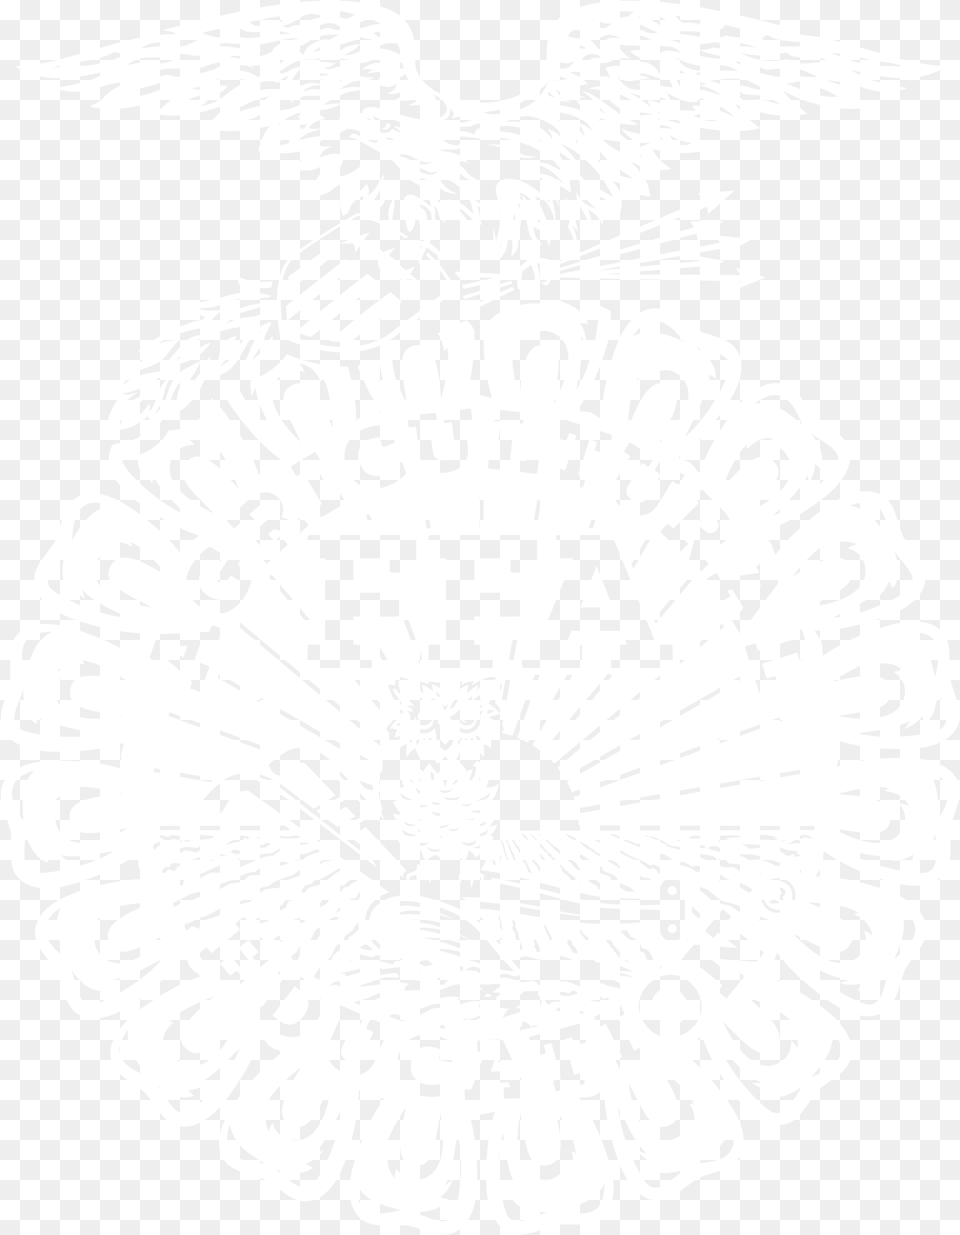 Ffa Logo New Ffa, Emblem, Symbol, Animal, Bird Png